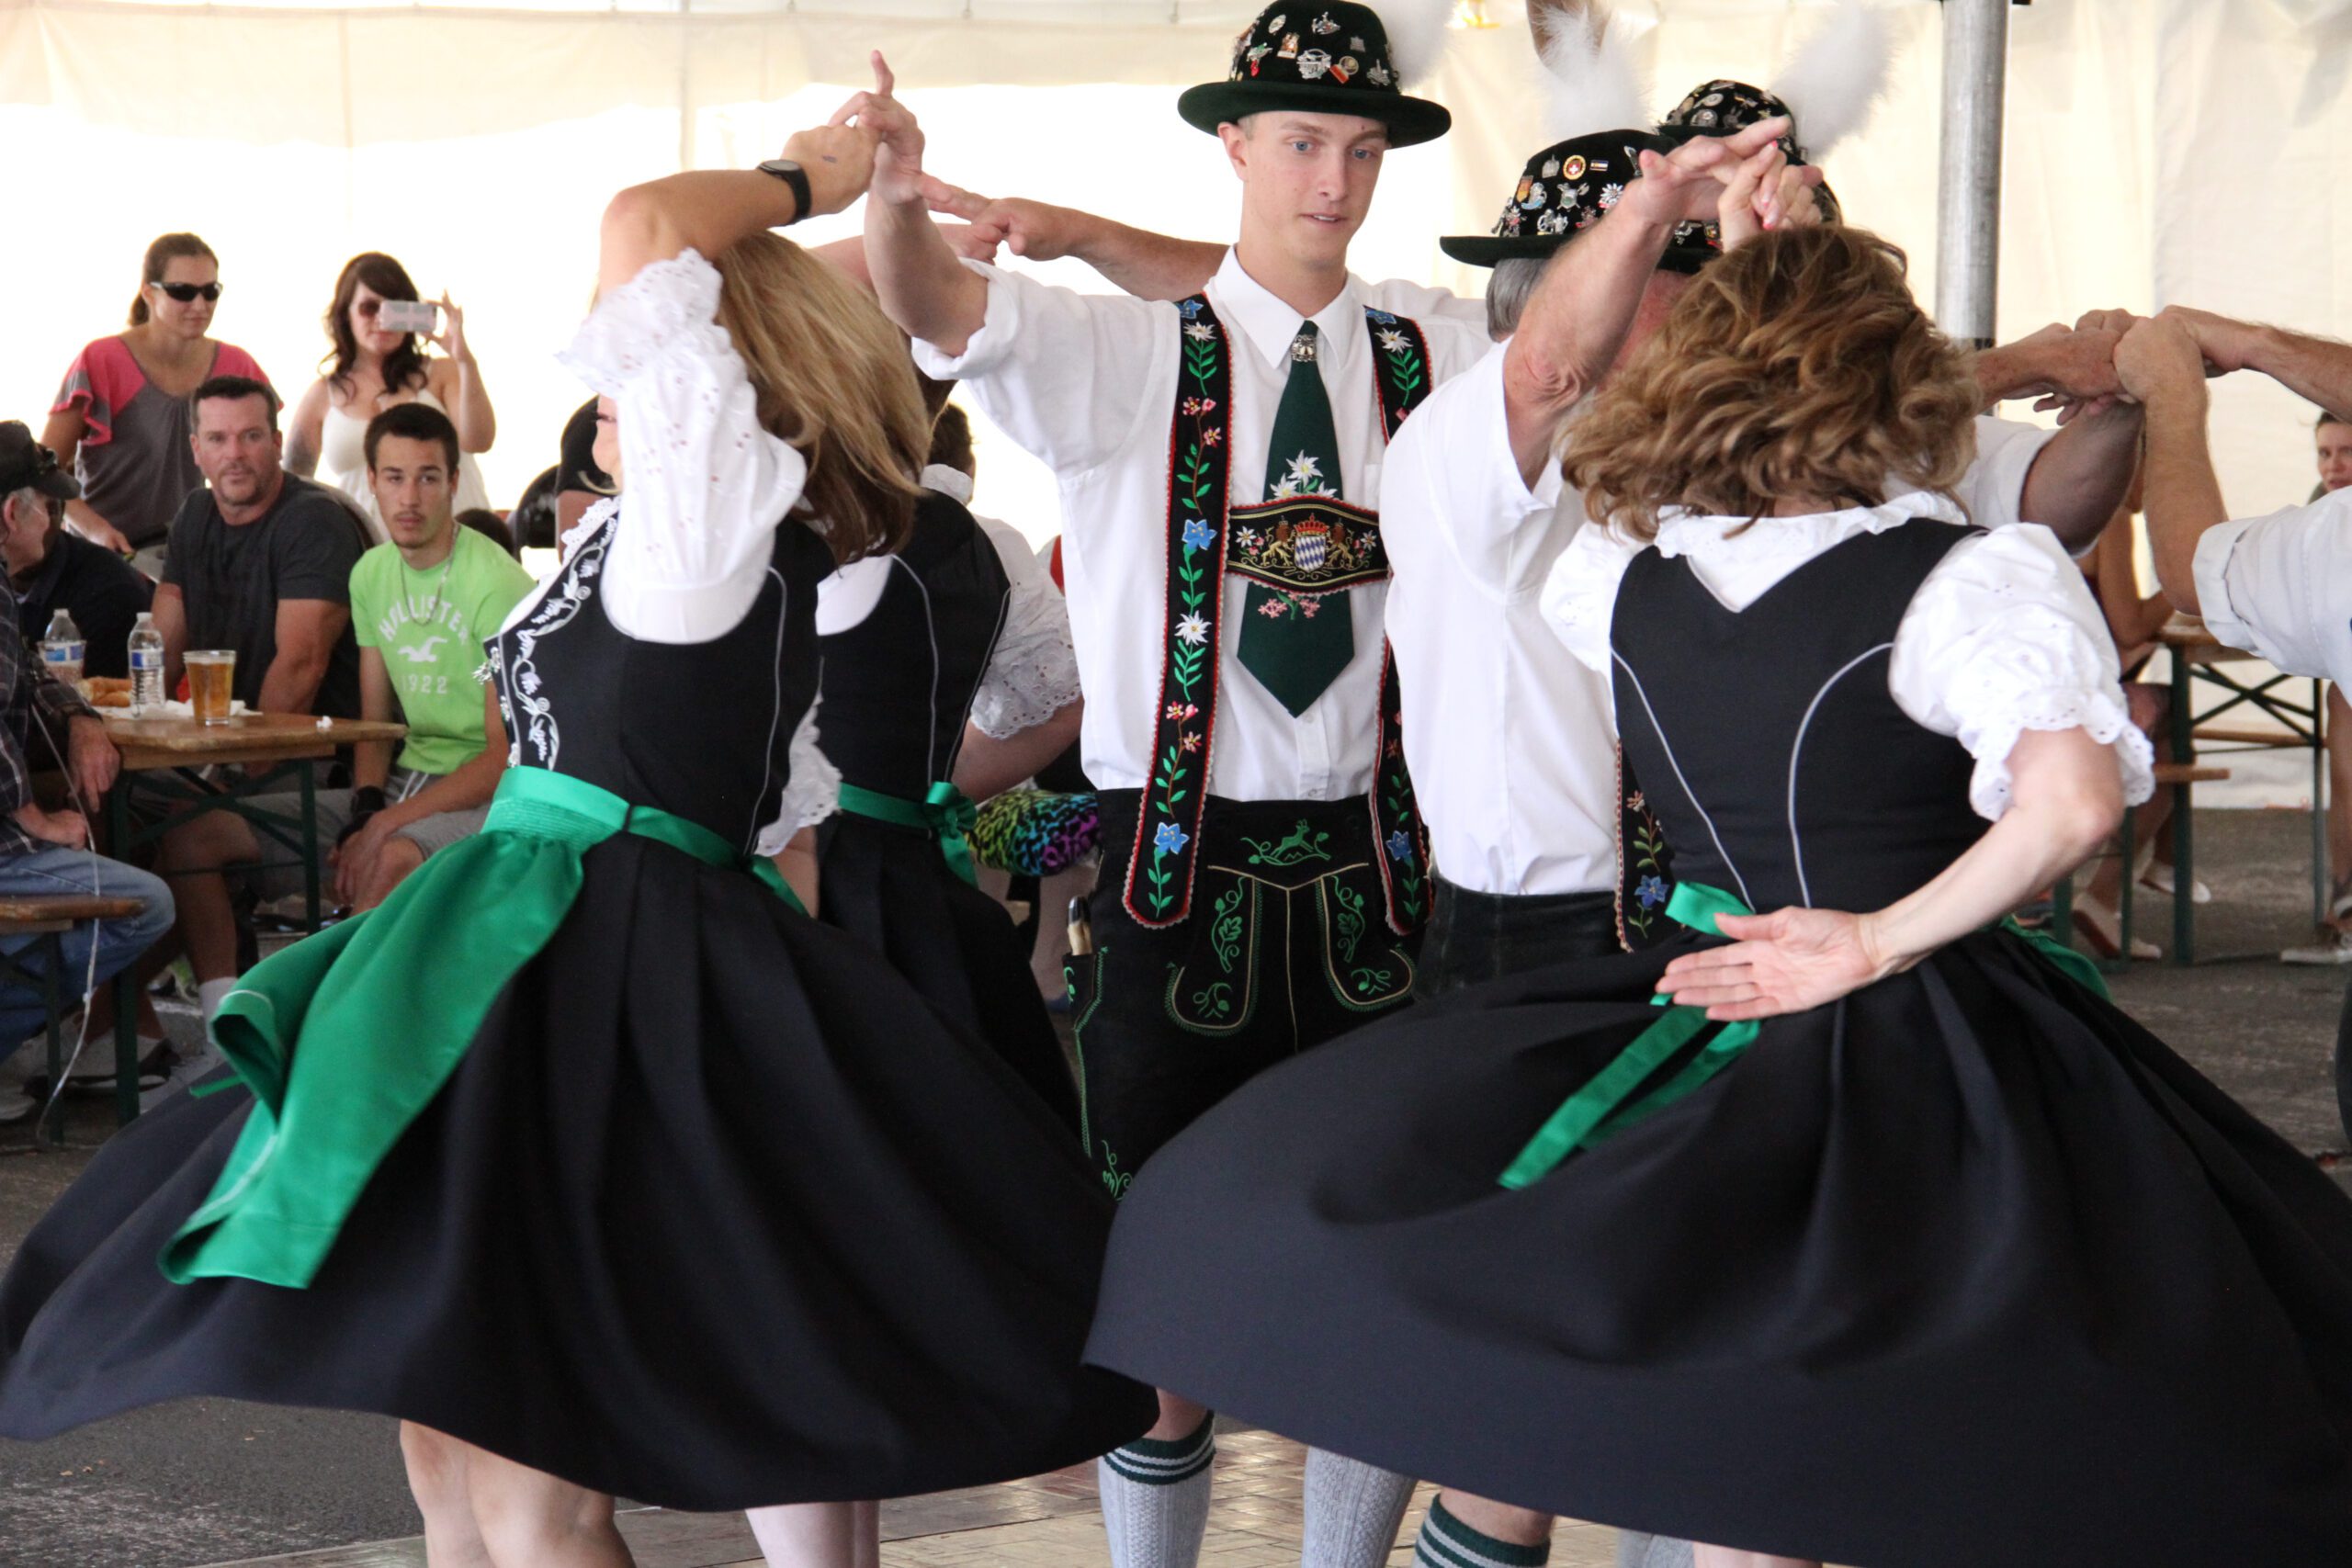 German dresses and dance